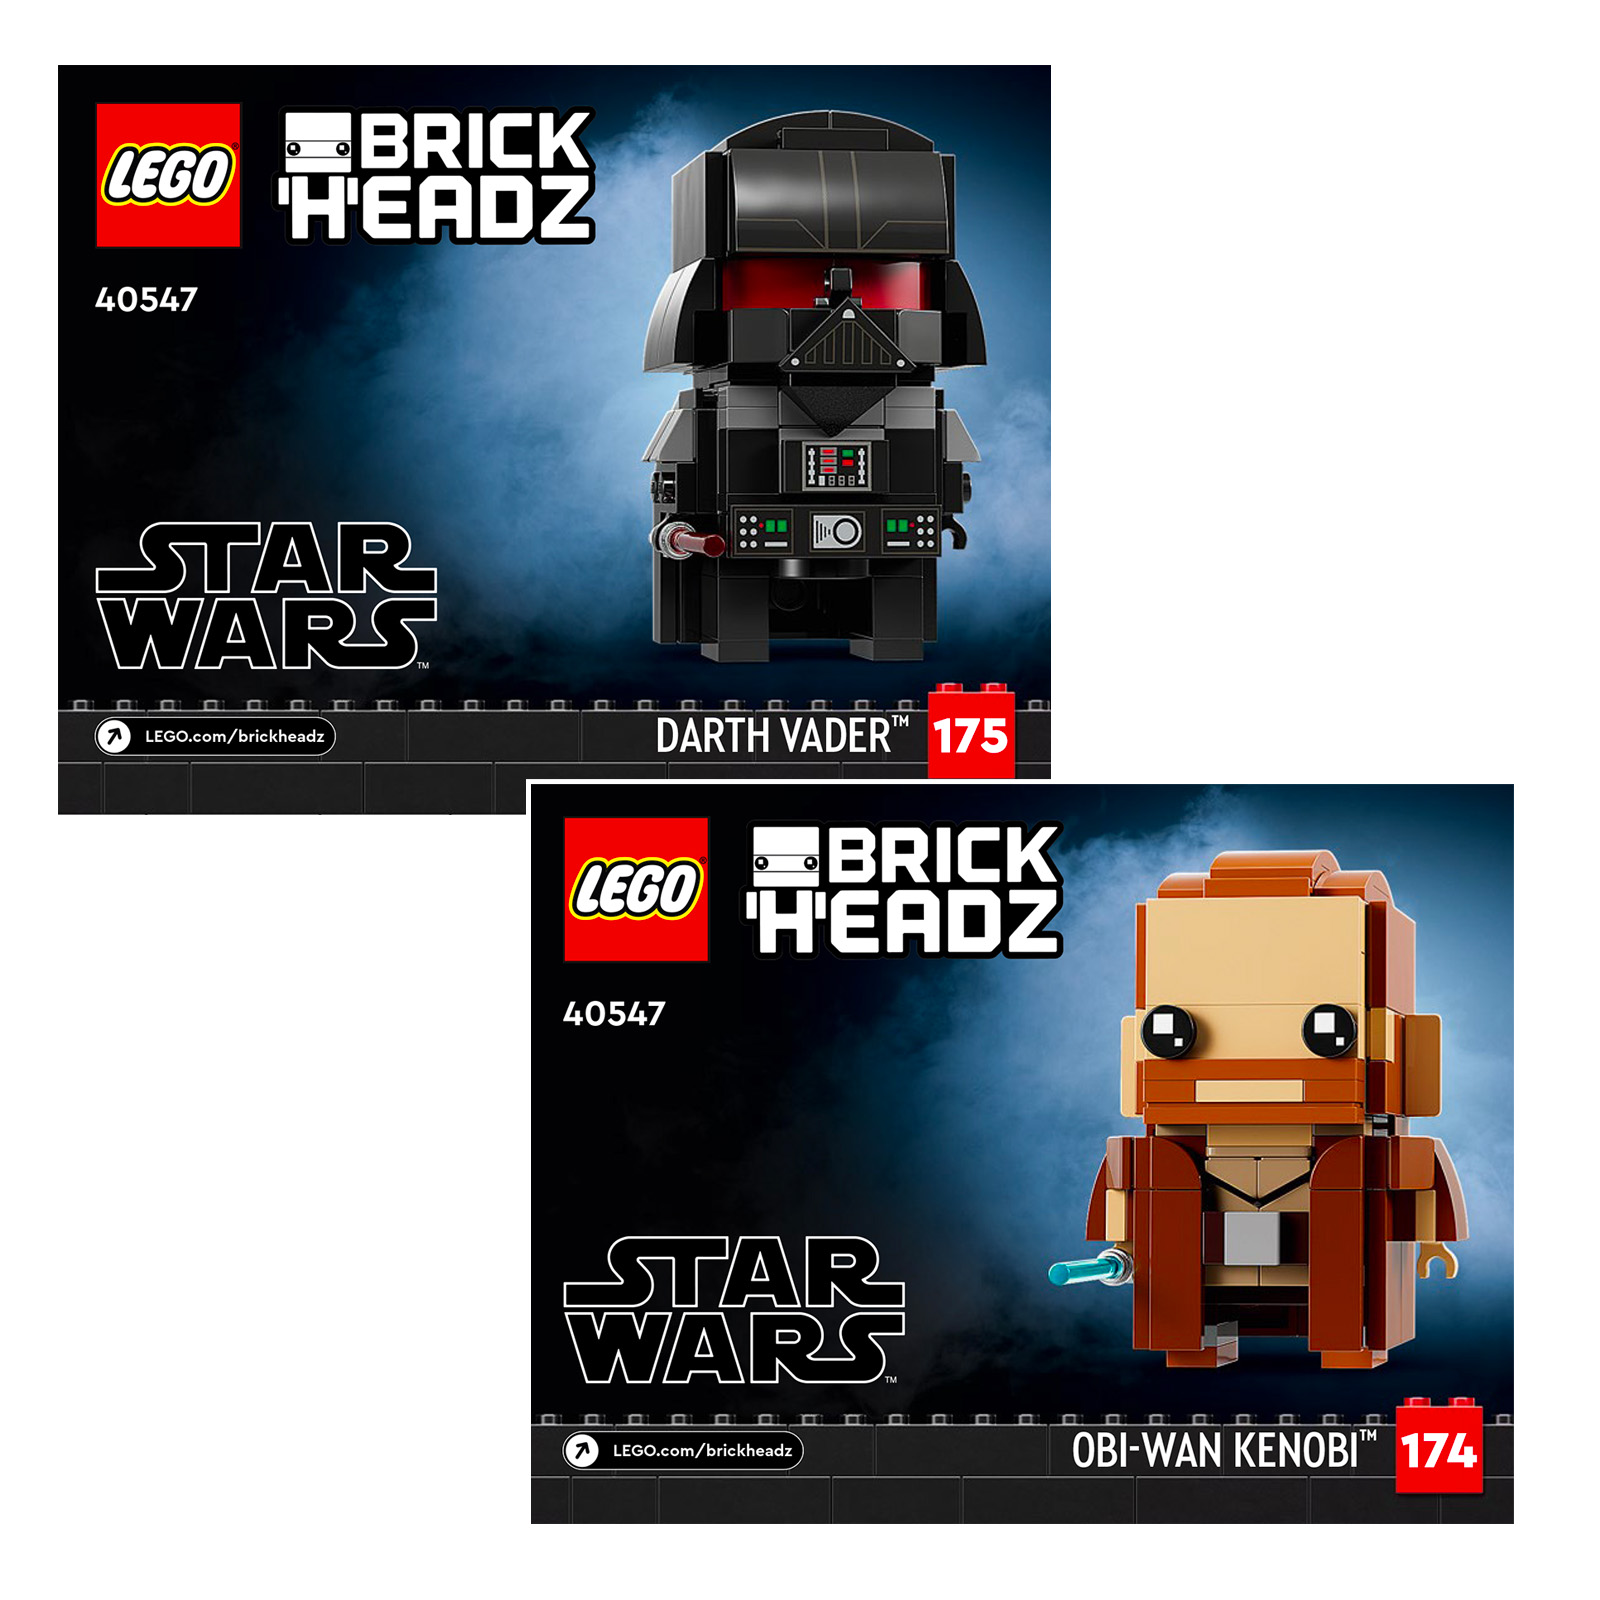 LEGO Star Wars BrickHeadz 40547 Obi-Wan Kenobi și Darth Vader: Primele imagini